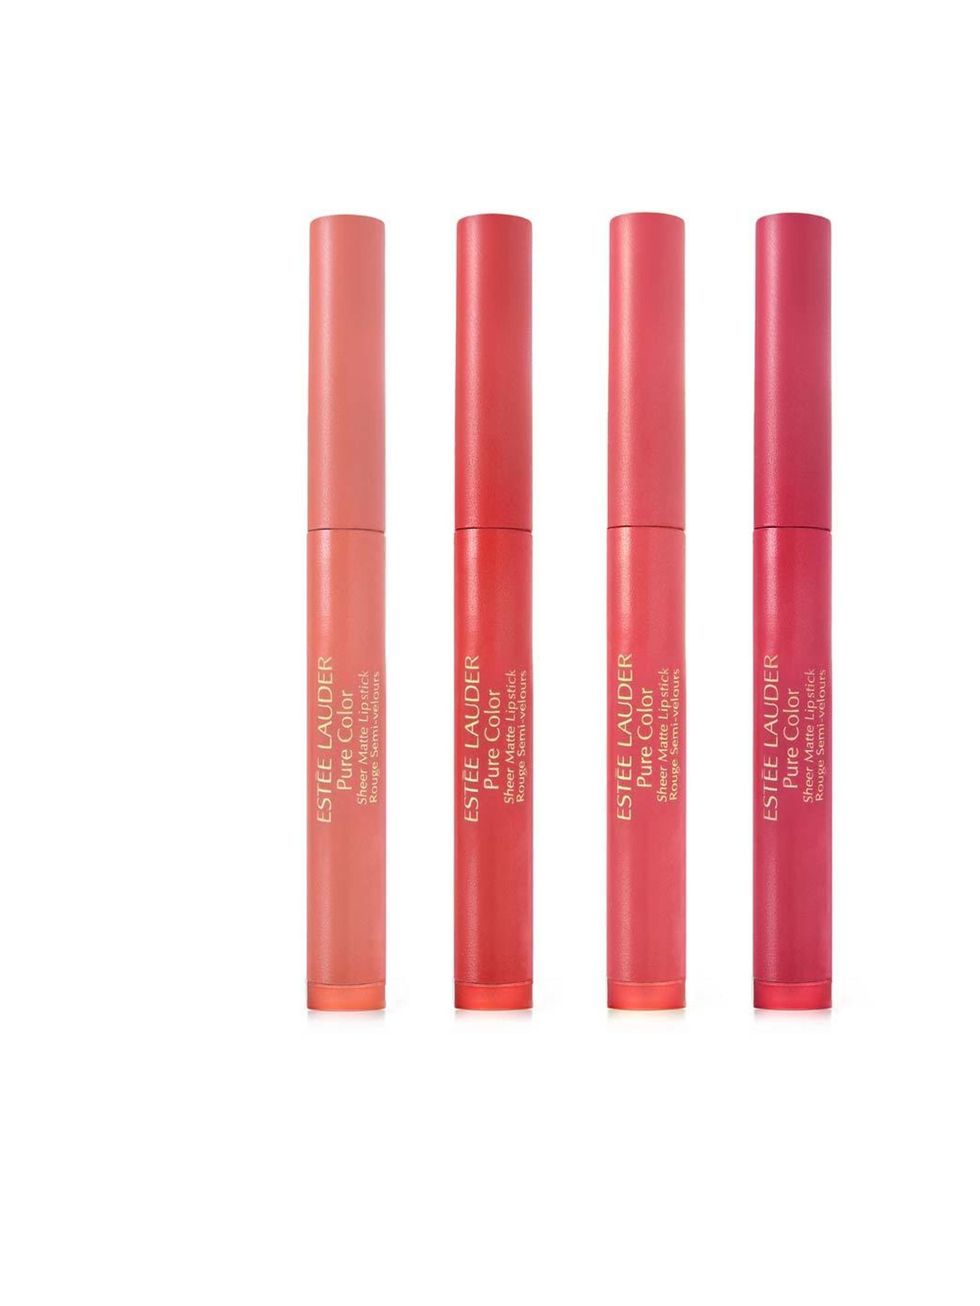 <p>Pure Colour Sheer Matte Lipstick, £19.50 each by <a href="http://www.esteelauder.co.uk/">Estee Lauder</a></p>